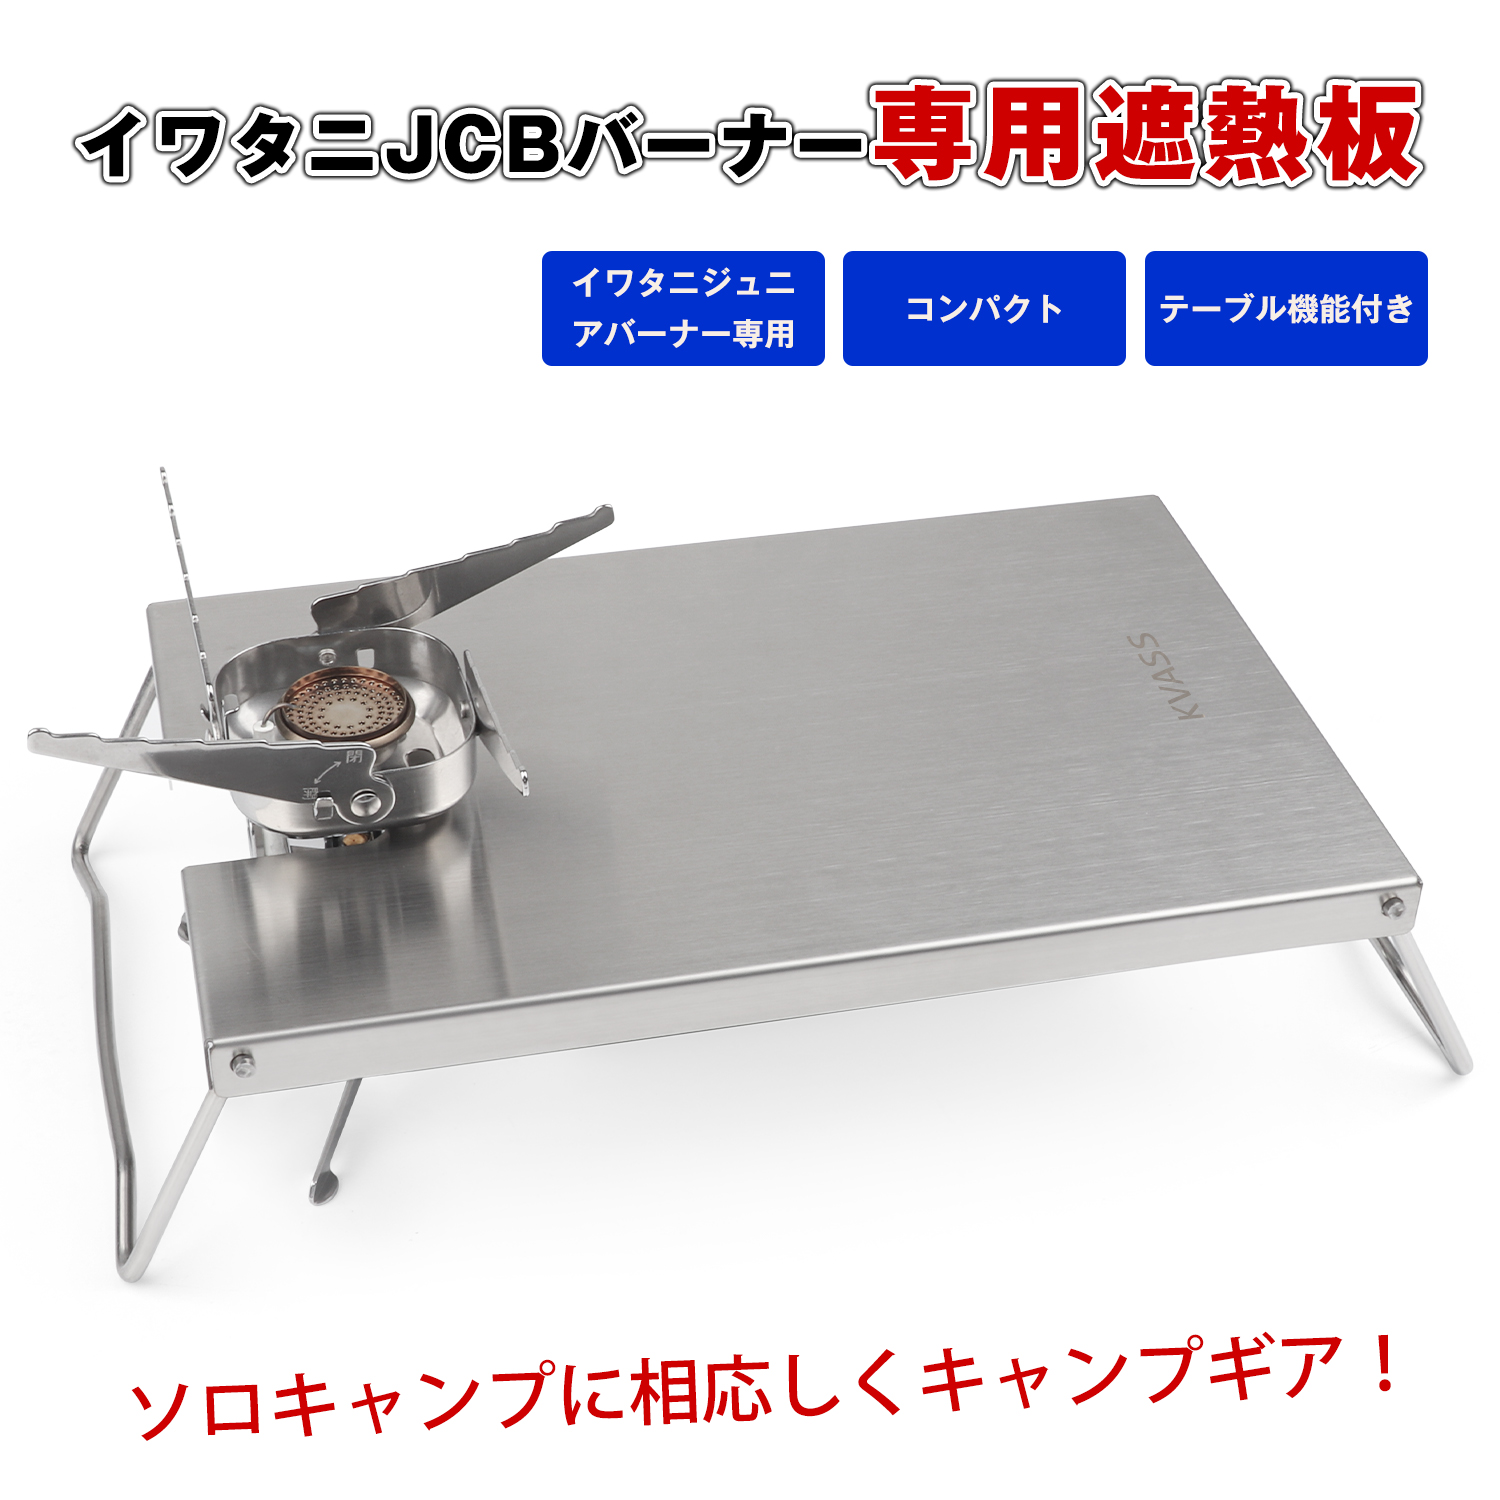 CB-JCBジュニアバーナー 遮熱テーブル KVASS イワタニ ジュニアコンパクトバーナー CB-JCB 専用 遮熱板 テーブル ステンレス  61％以上節約